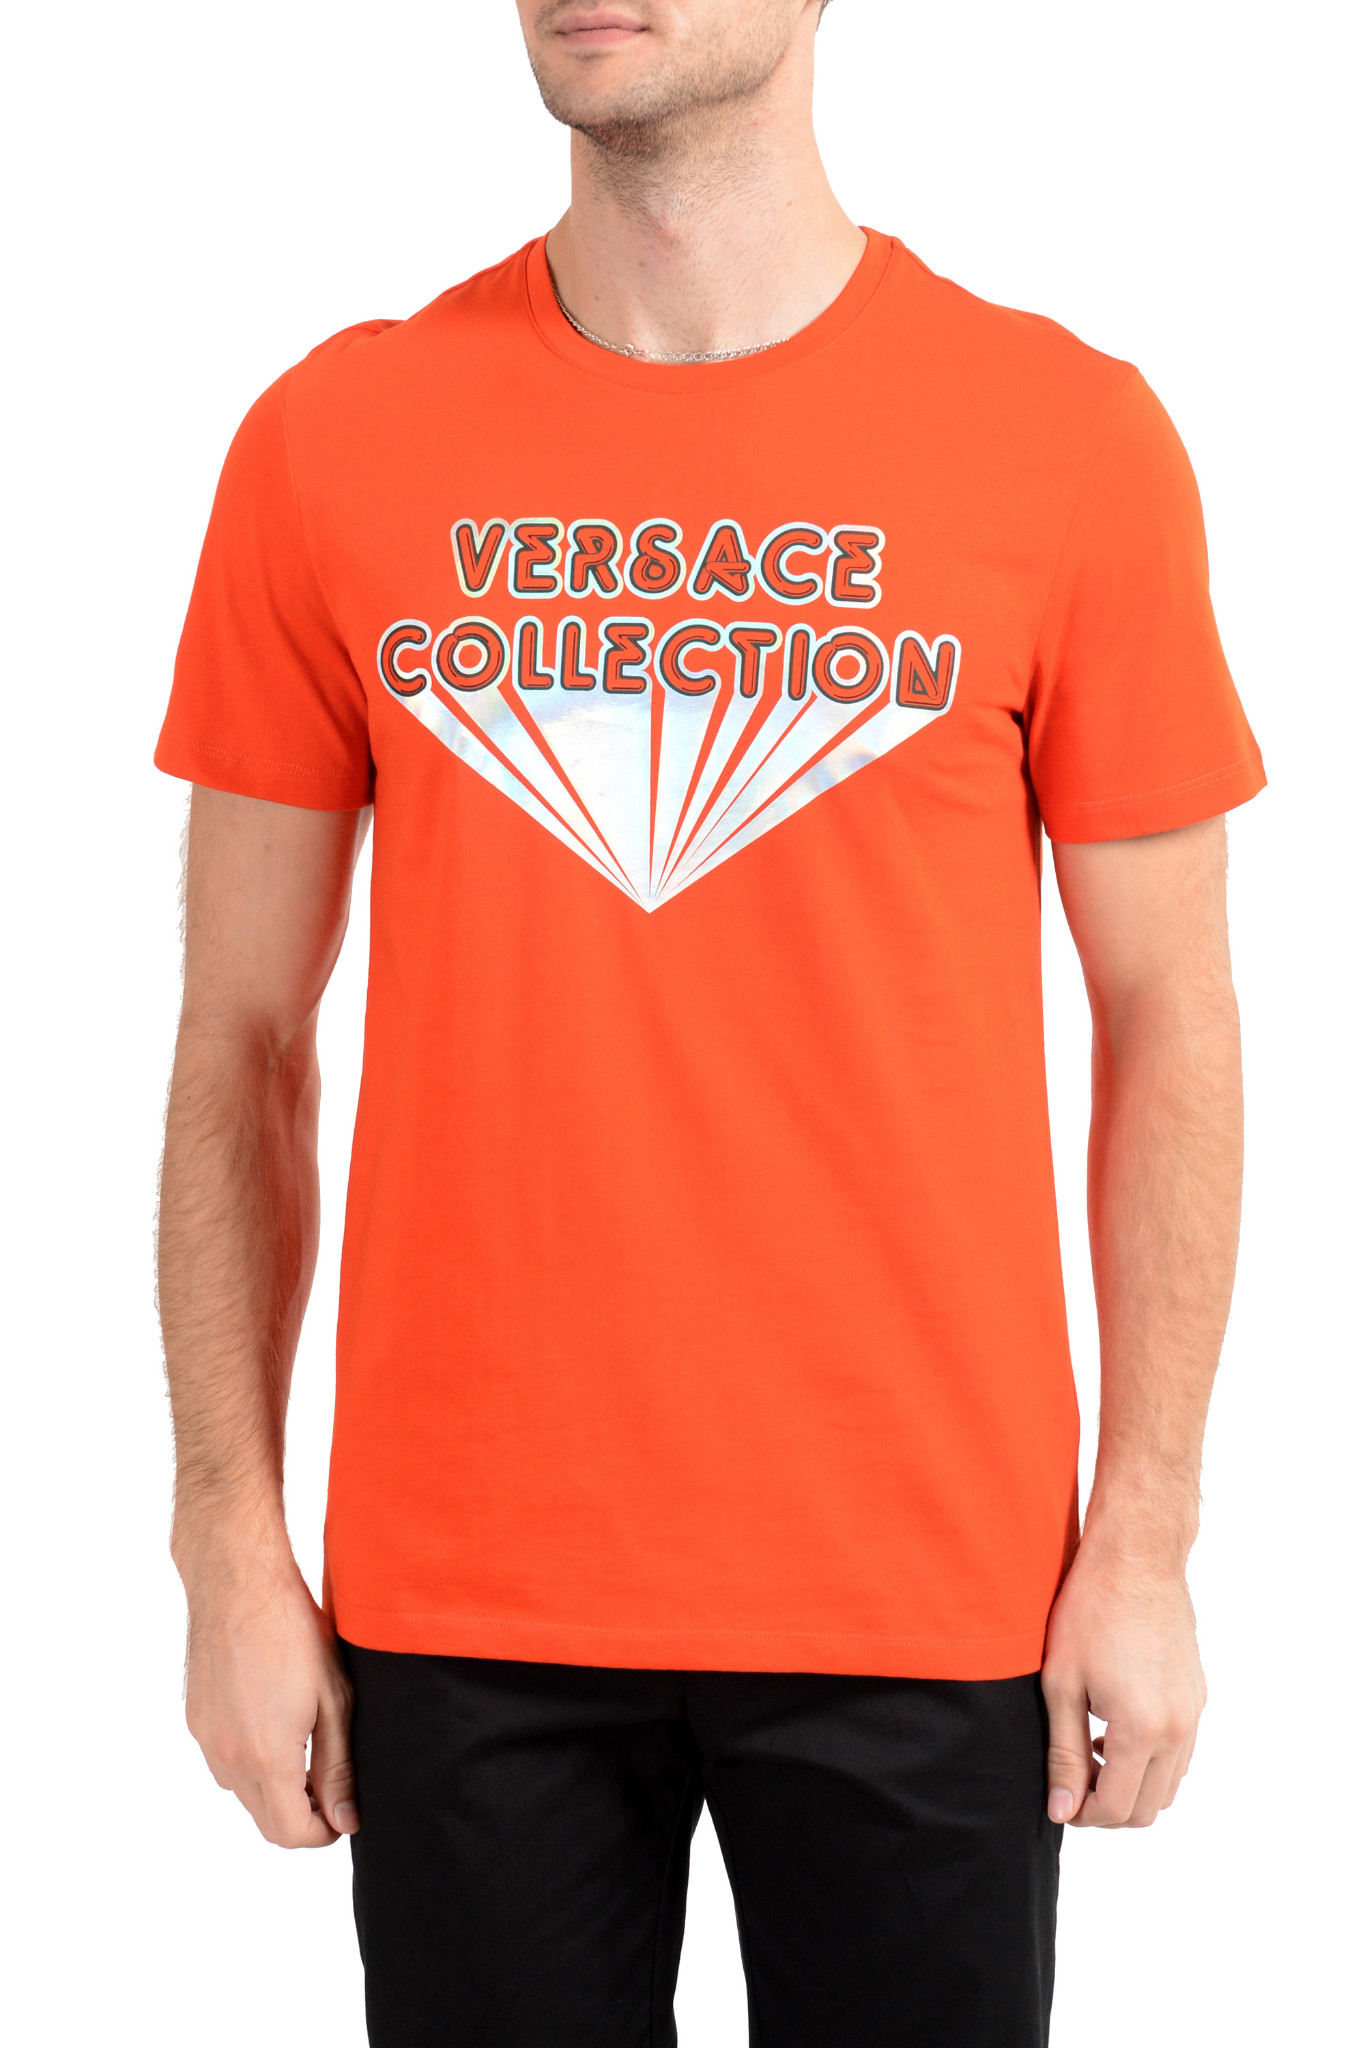 Versace Collection Men's Bright Orange 